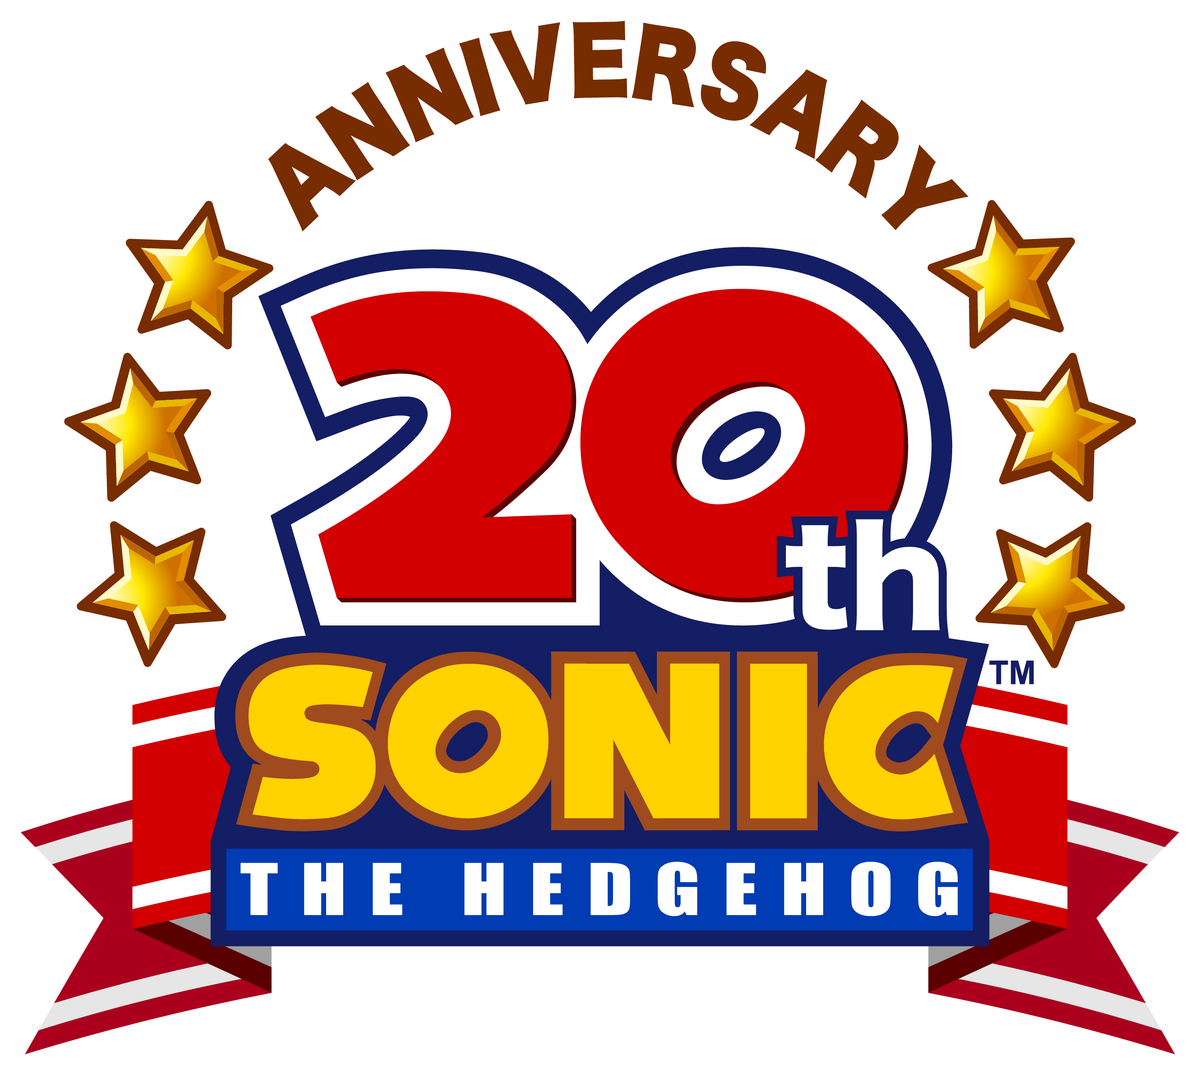 Twenty years of Sonic the Hedgehog - BBC News